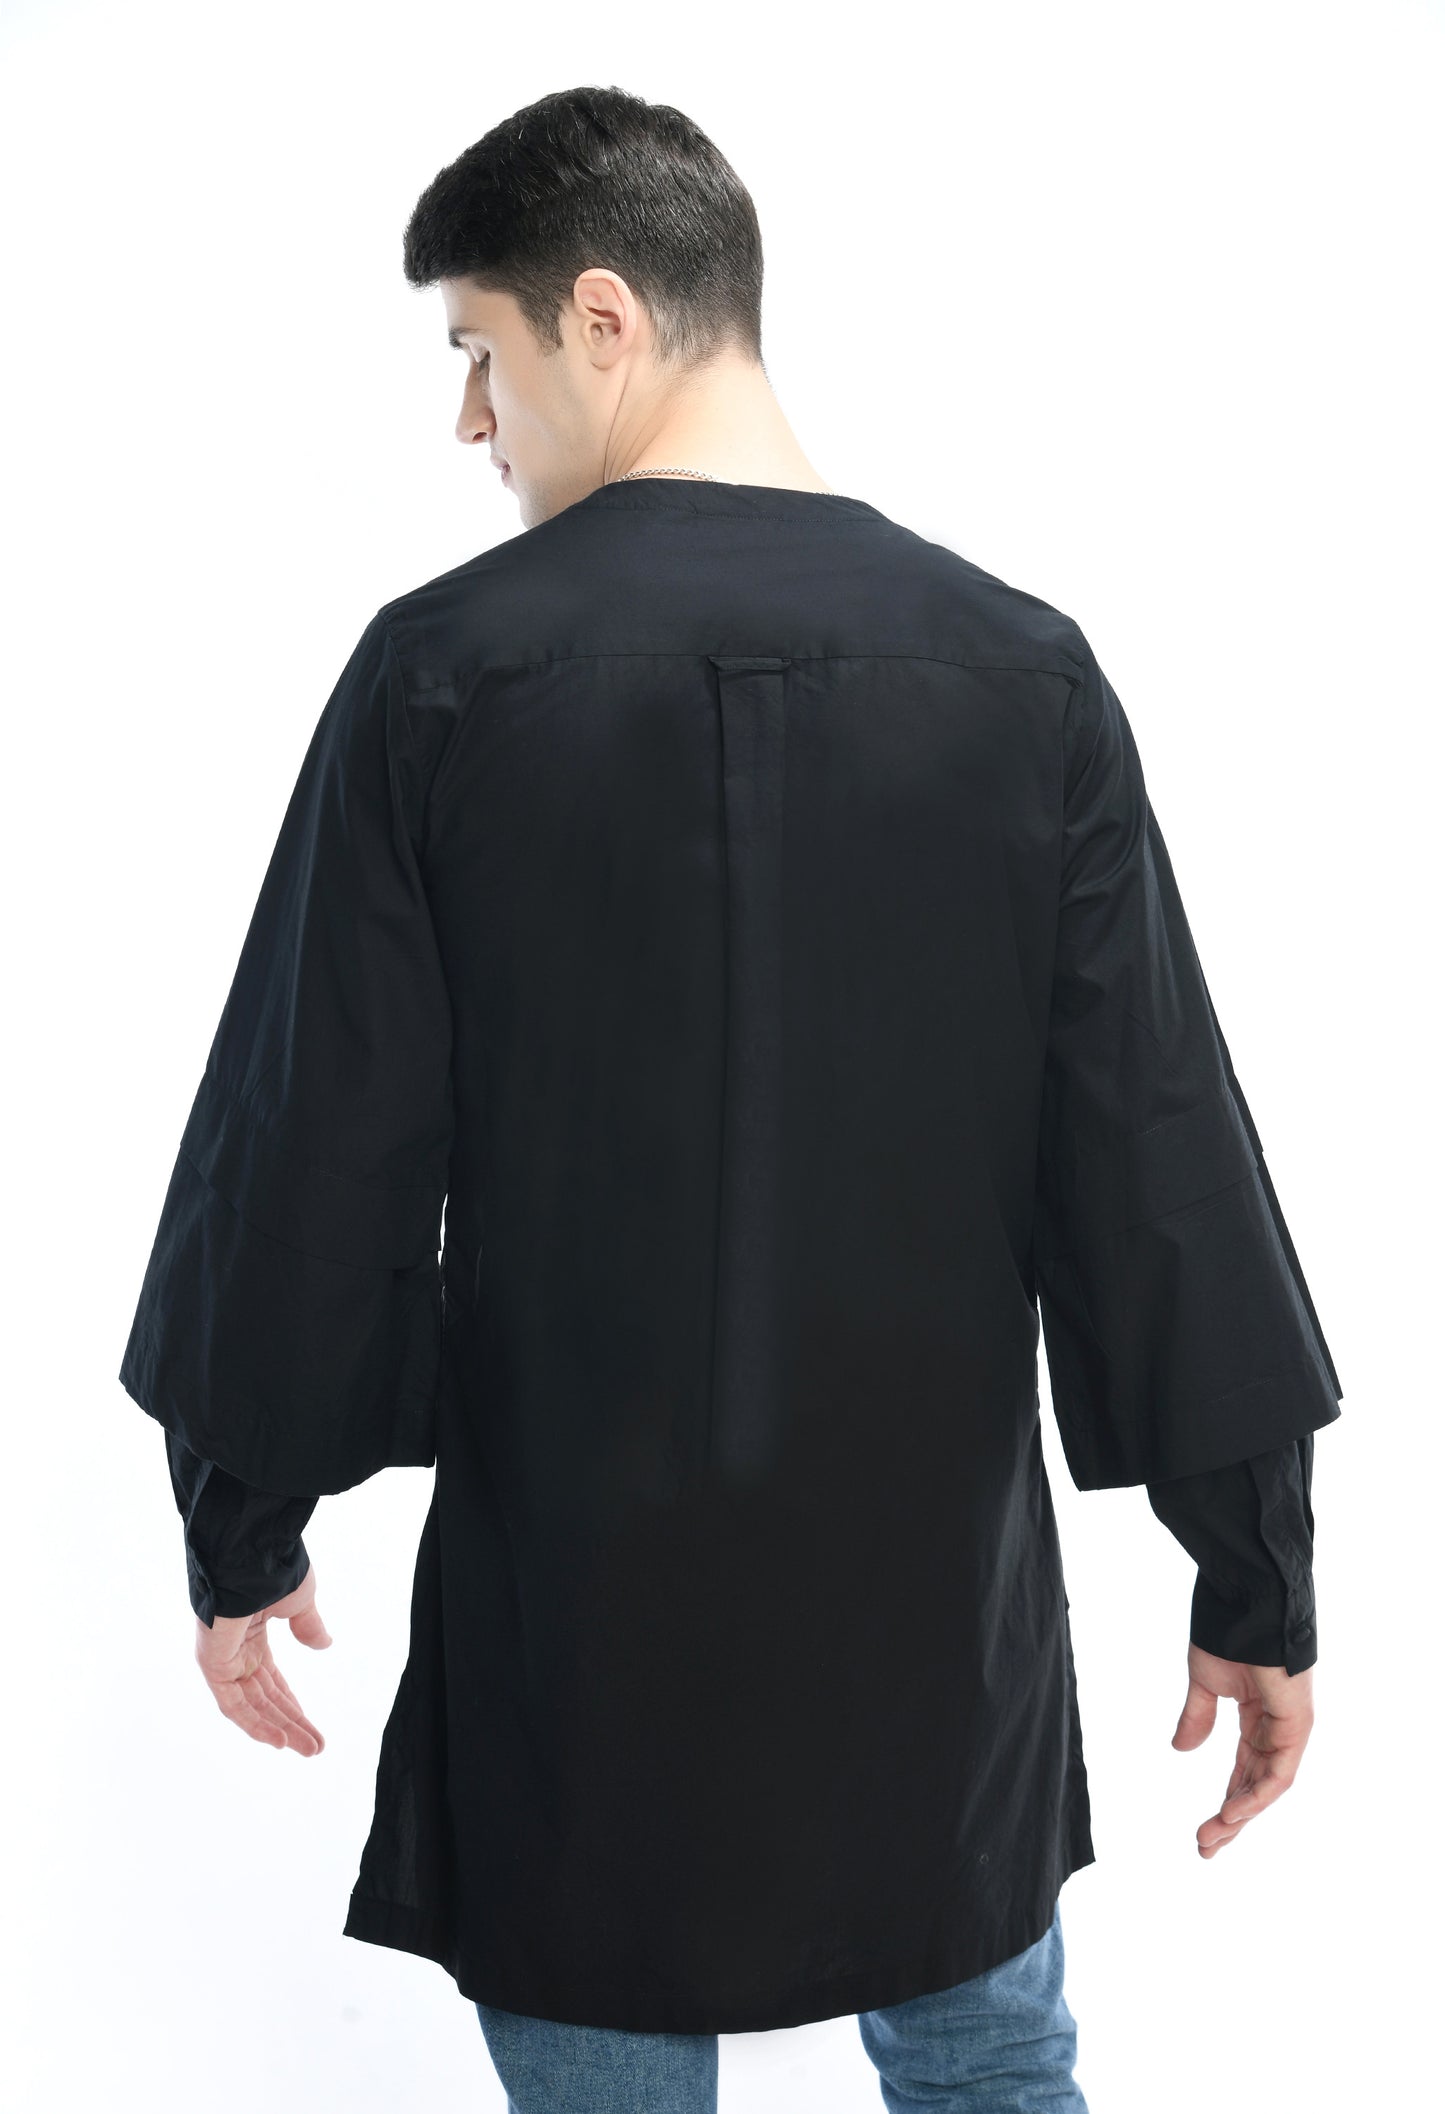 Black, stylish, lose-fit cotton shirt with digital print on it